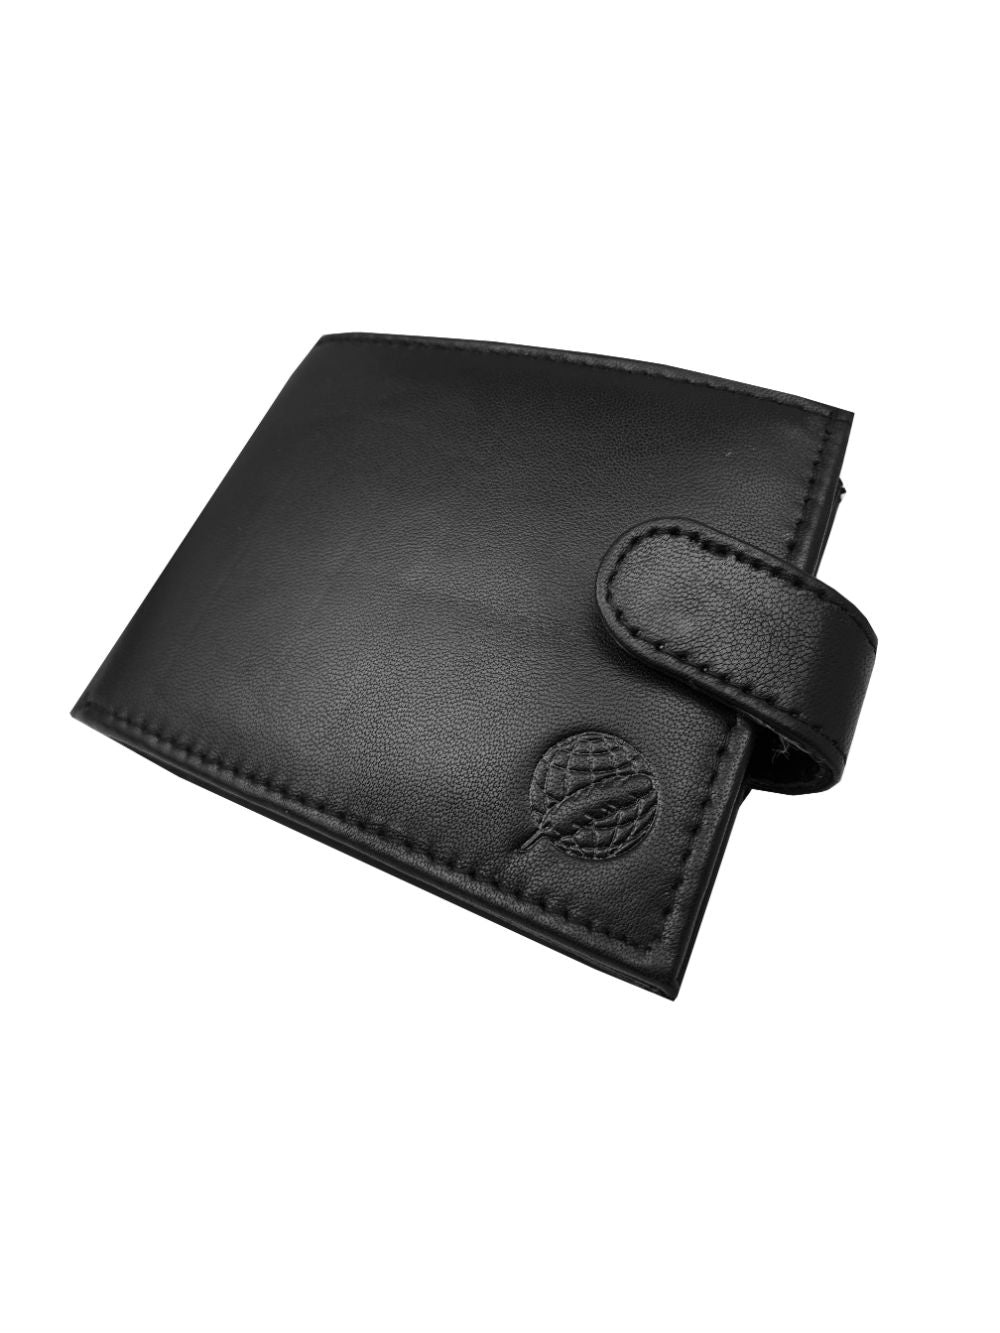 Roamlite Mens Wallet Black Leather RL46 side